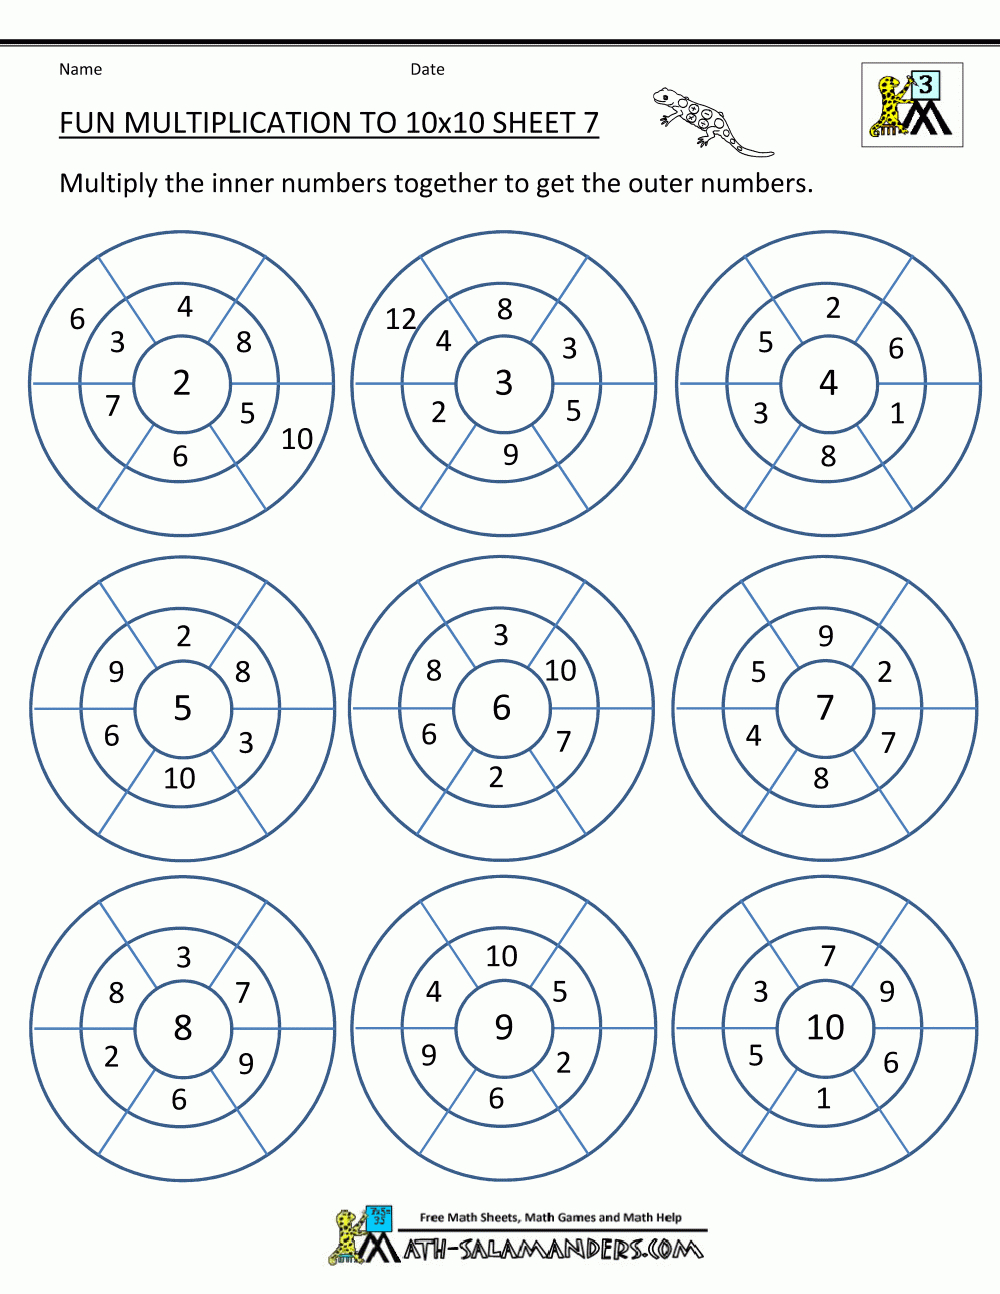 Printable-Multiplication-Sheets-Fun-Multiplication-To-10X10 in Printable Multiplication Matching Game